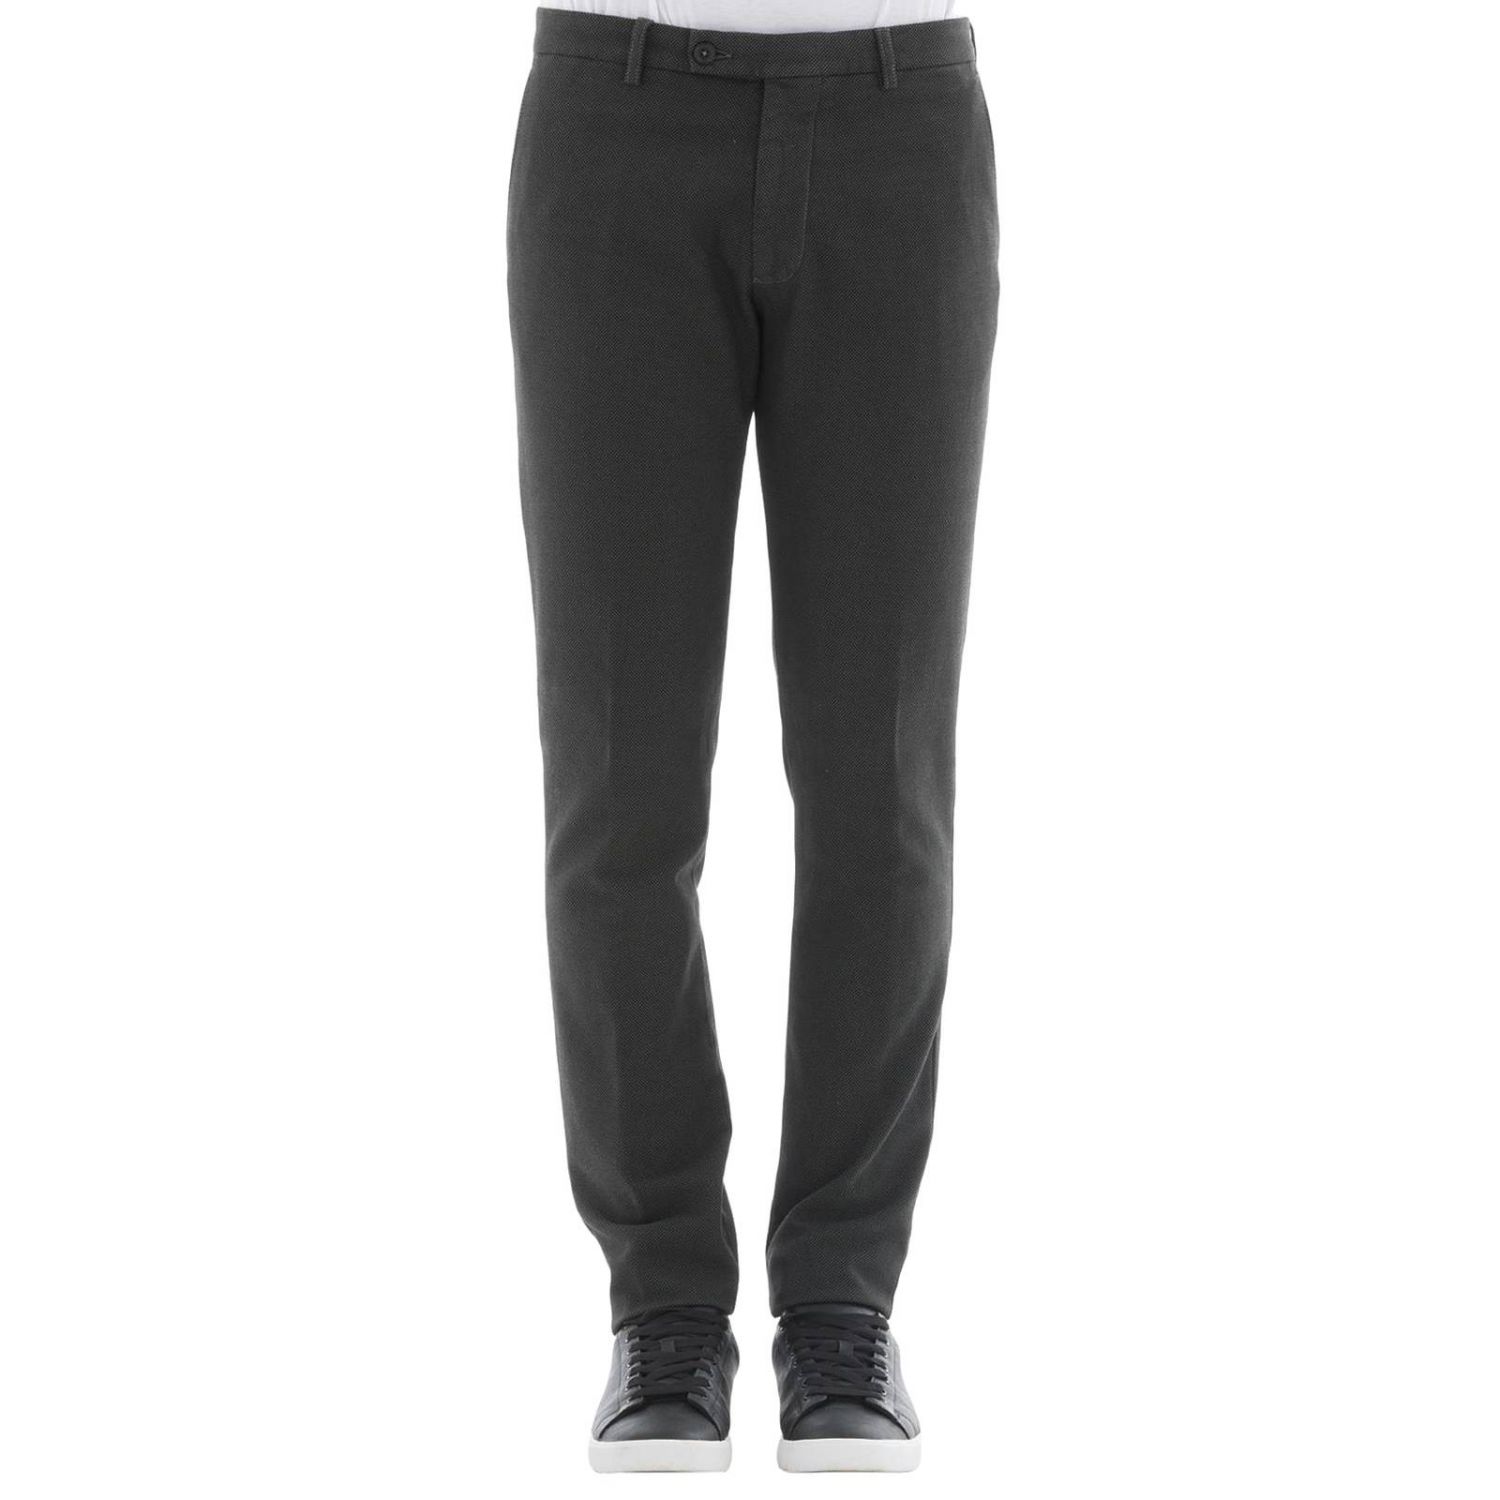 Berwick Outlet: pants for man - Green | Berwick pants SC REG online at ...